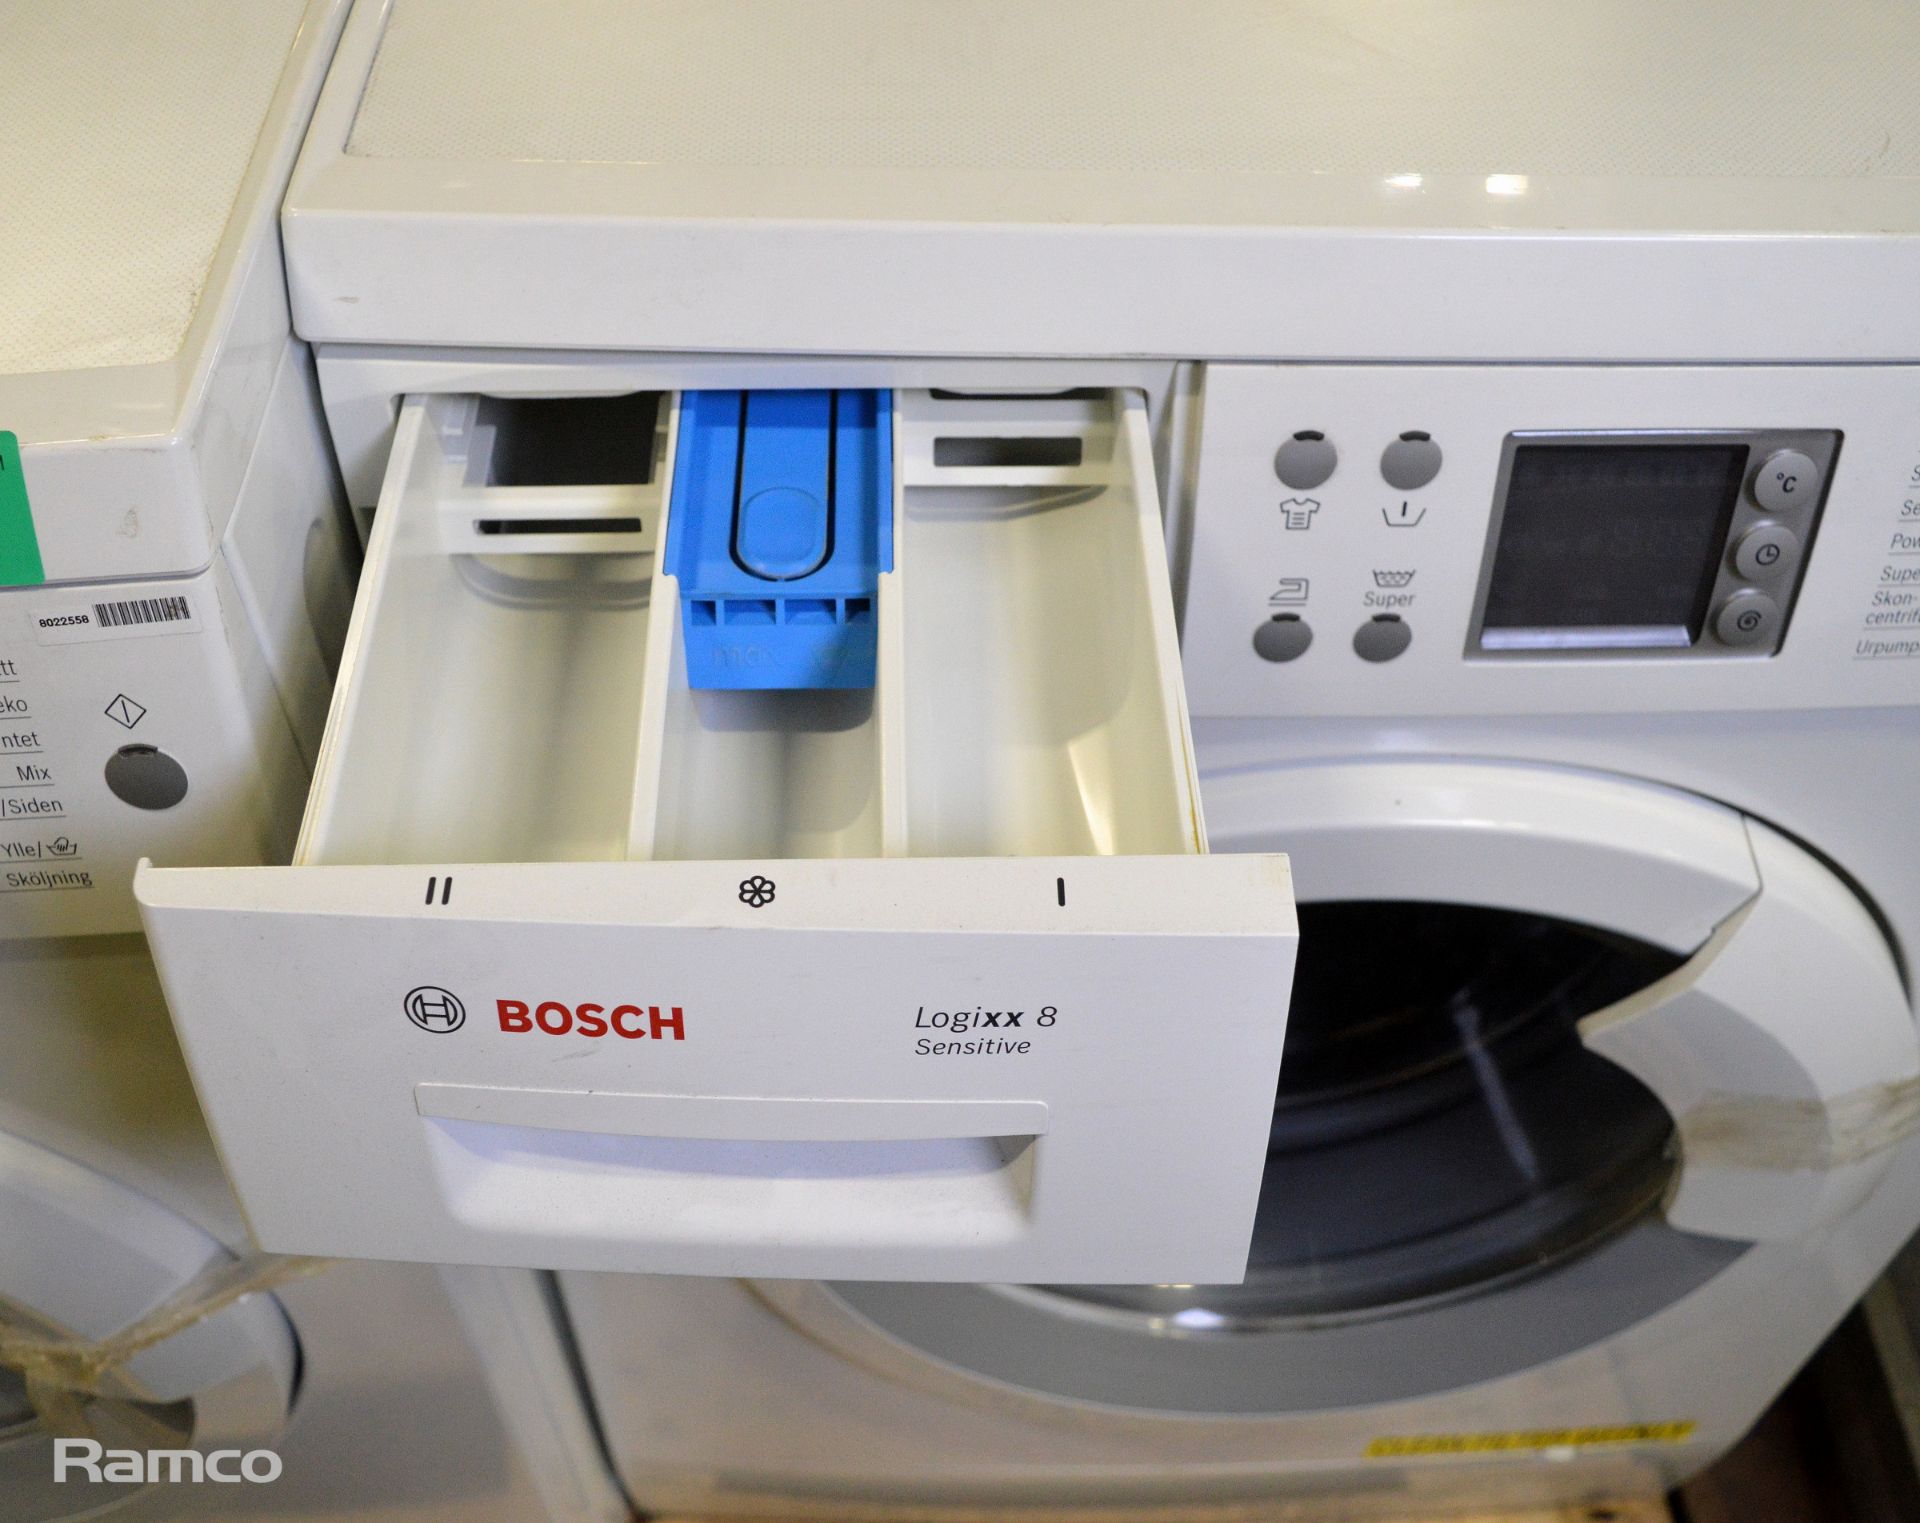 Bosch WAS28460Sn Washing Machine - 2 pin european plug - wash settings in German - Image 2 of 4